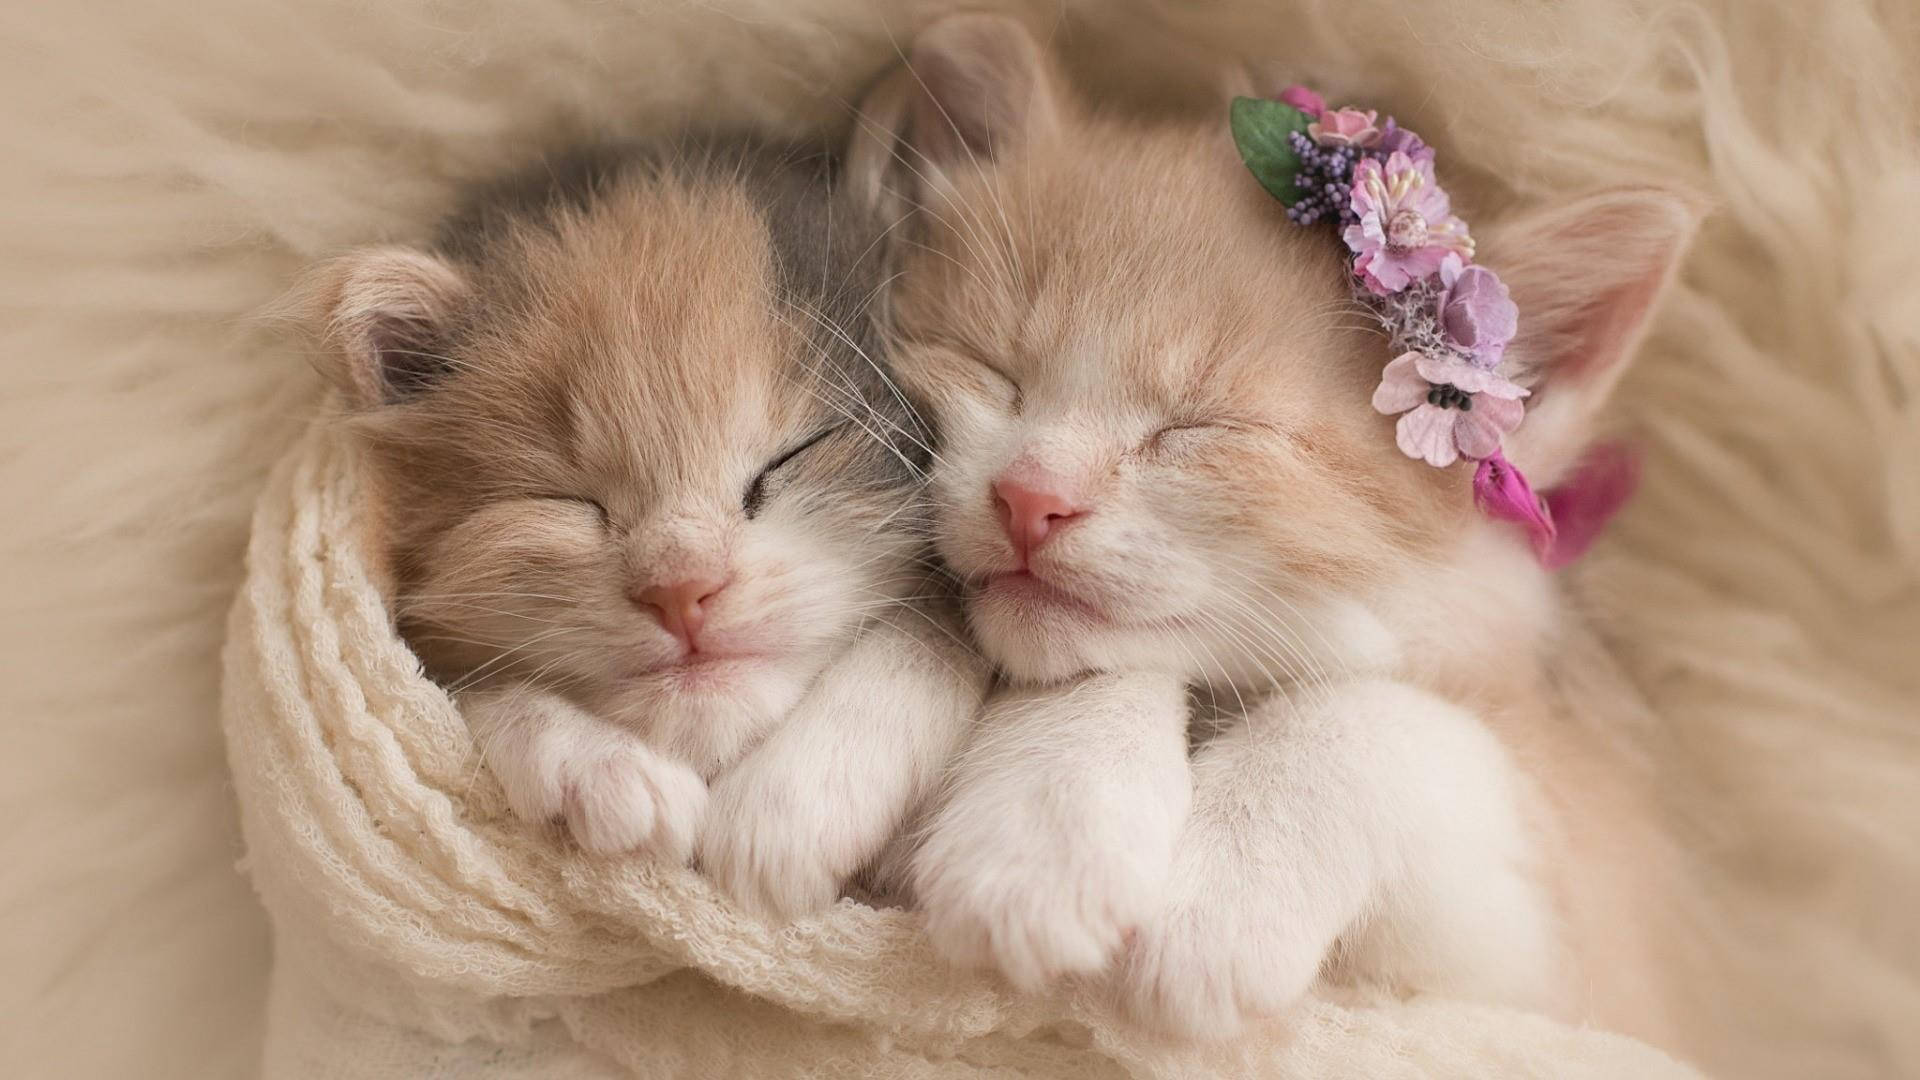 Baby Cats Cuddling Image Wallpaper